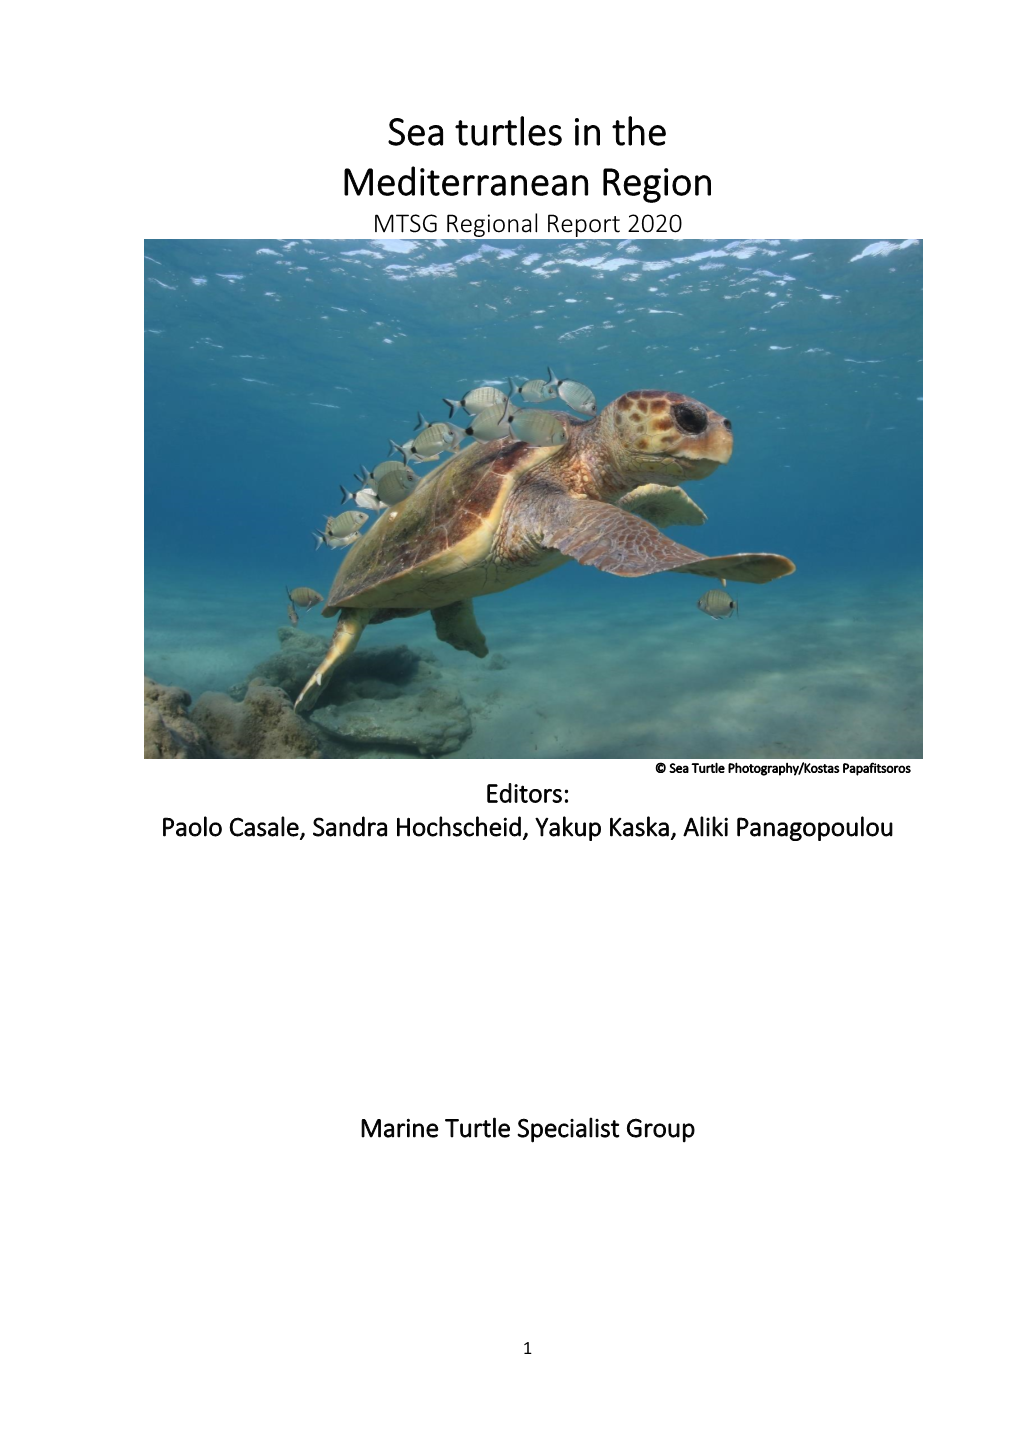 Sea Turtles in the Mediterranean Region MTSG Regional Report 2020